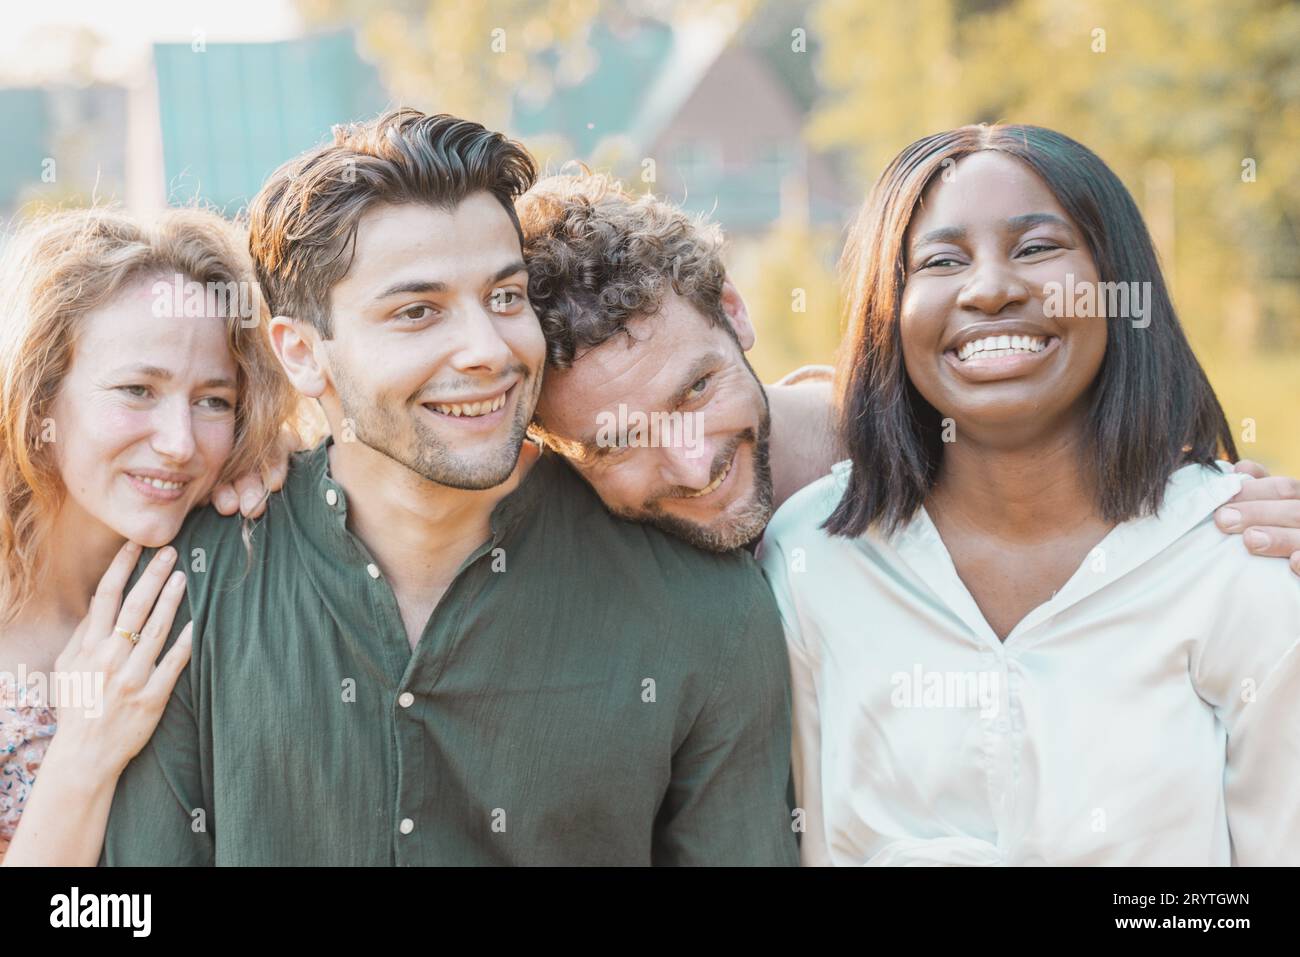 Radiant Diversity: Youthful Friendship in a Joyful Selfie, Stock Photo